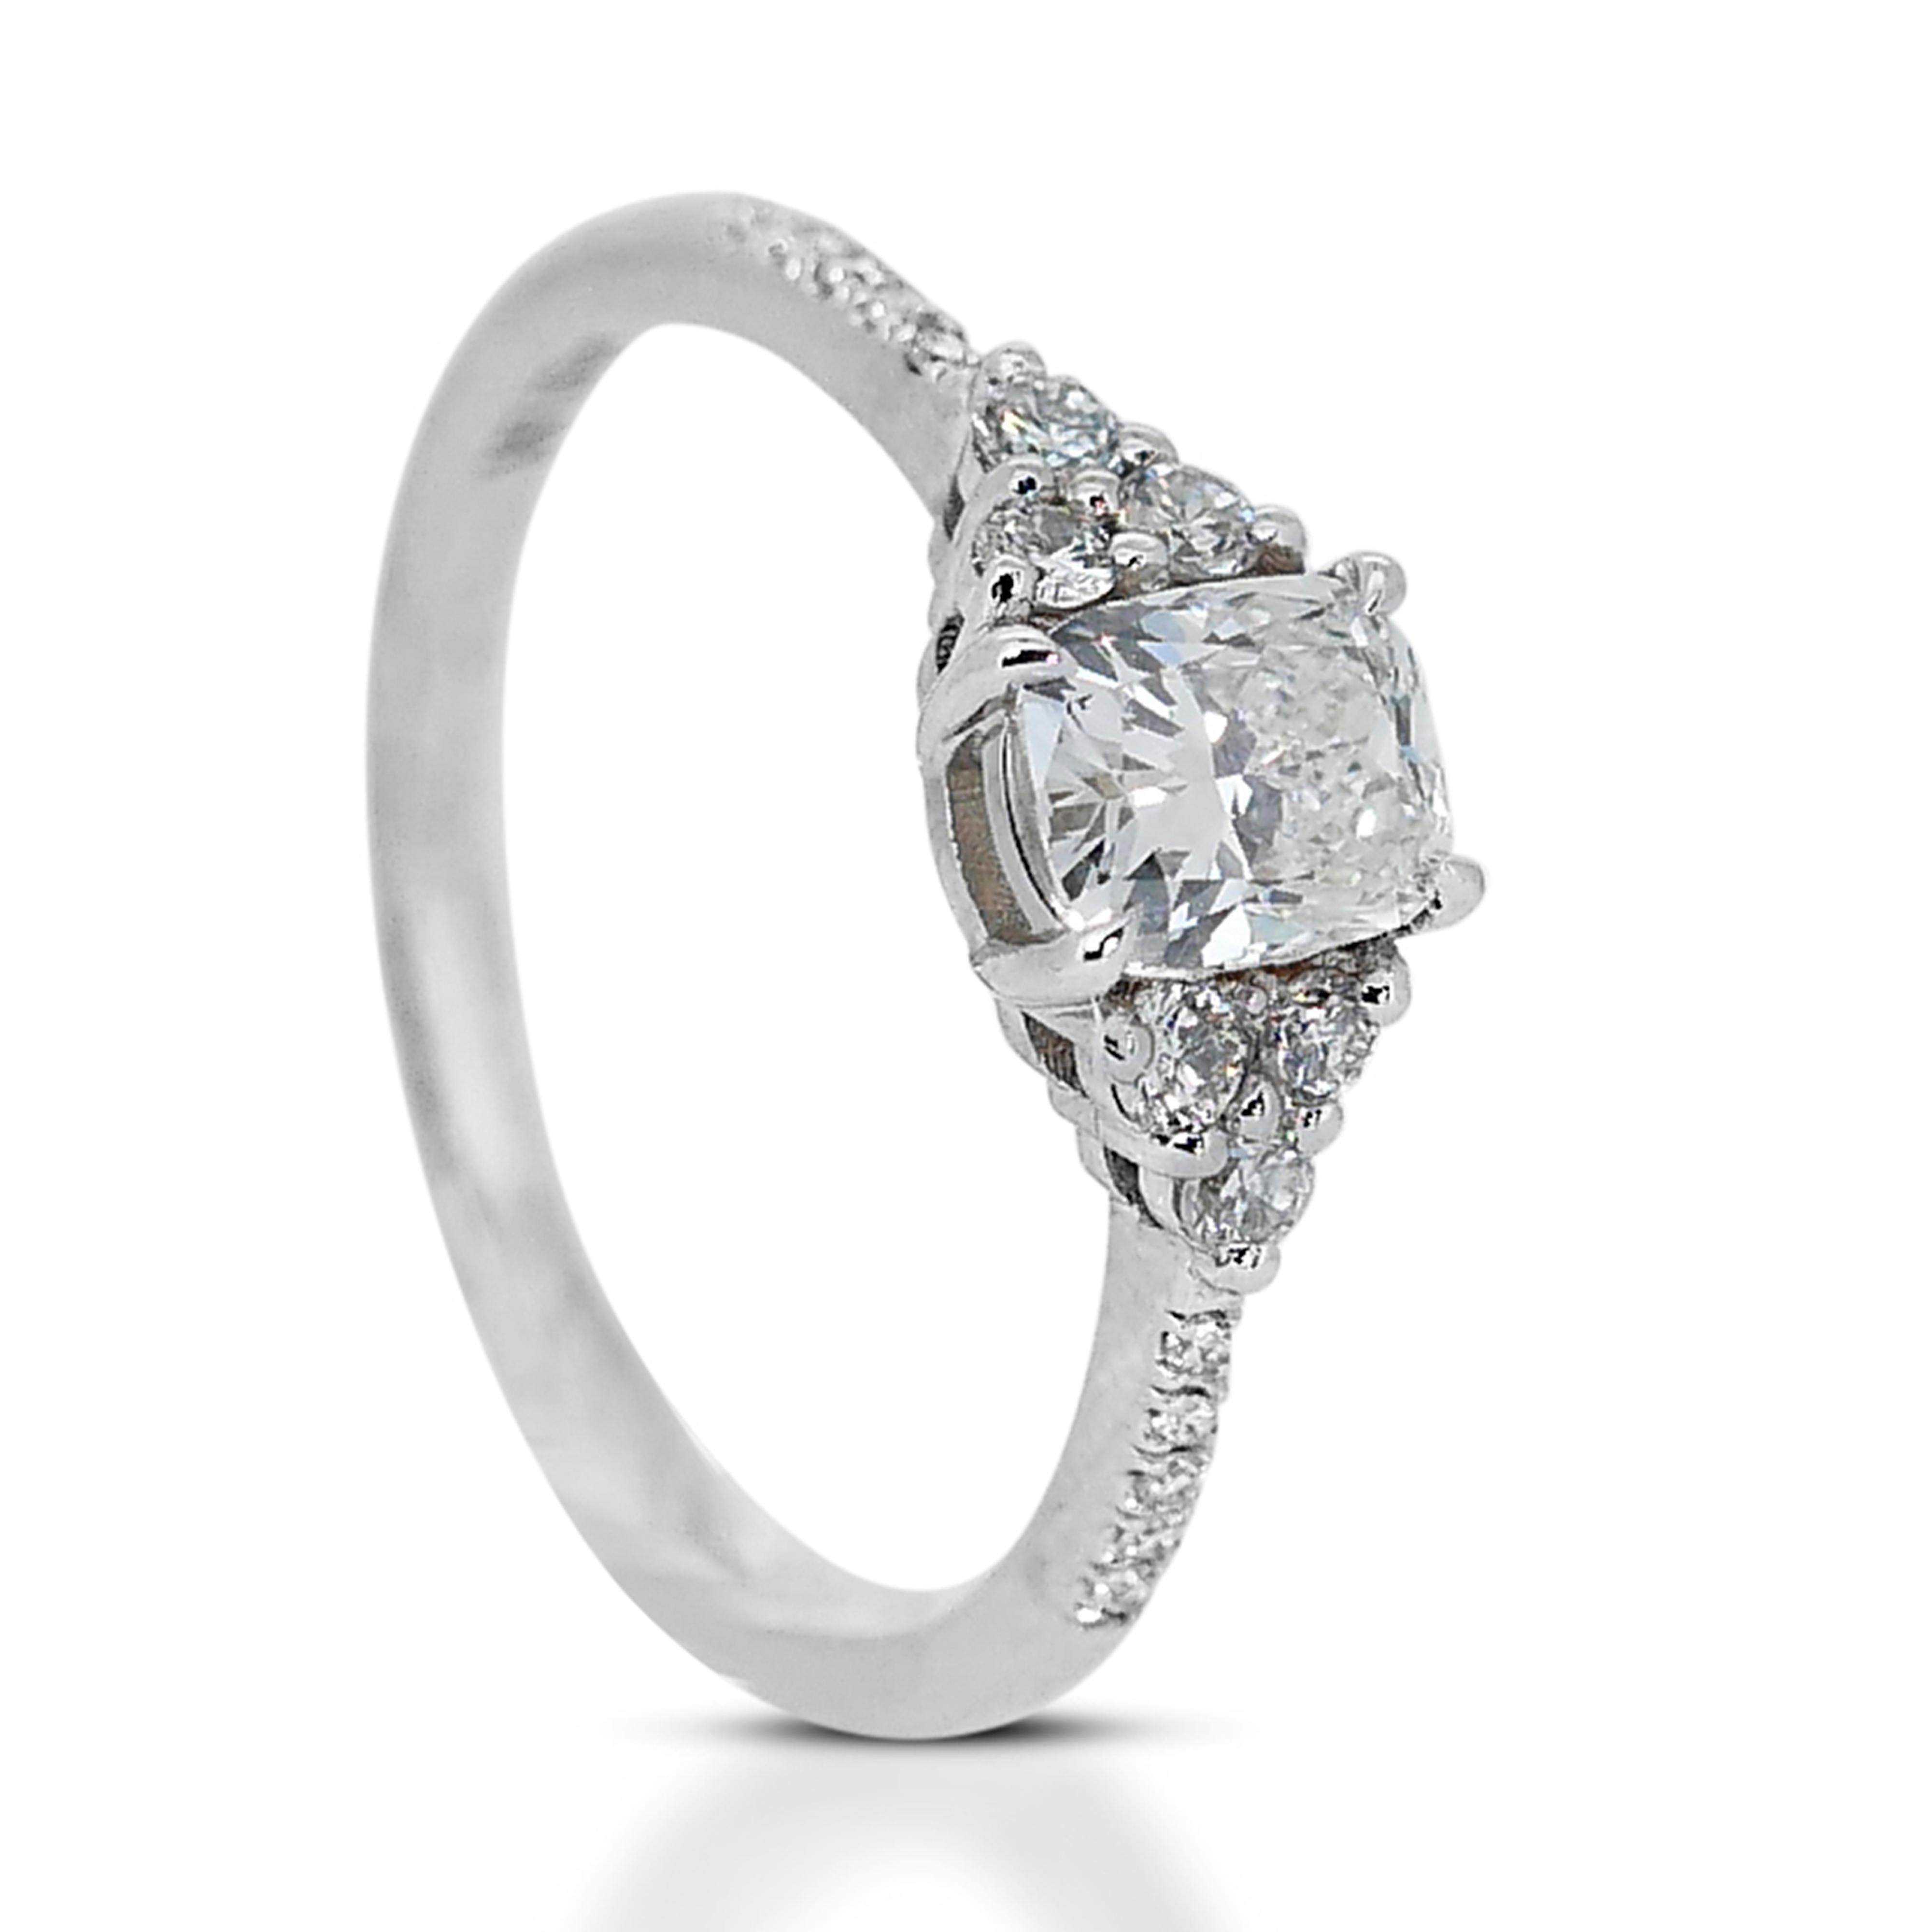 Stunning 18K White Gold Ideal Cut 3 Stone Natural Diamond Ring w/1.73ct-IGI CERT For Sale 3